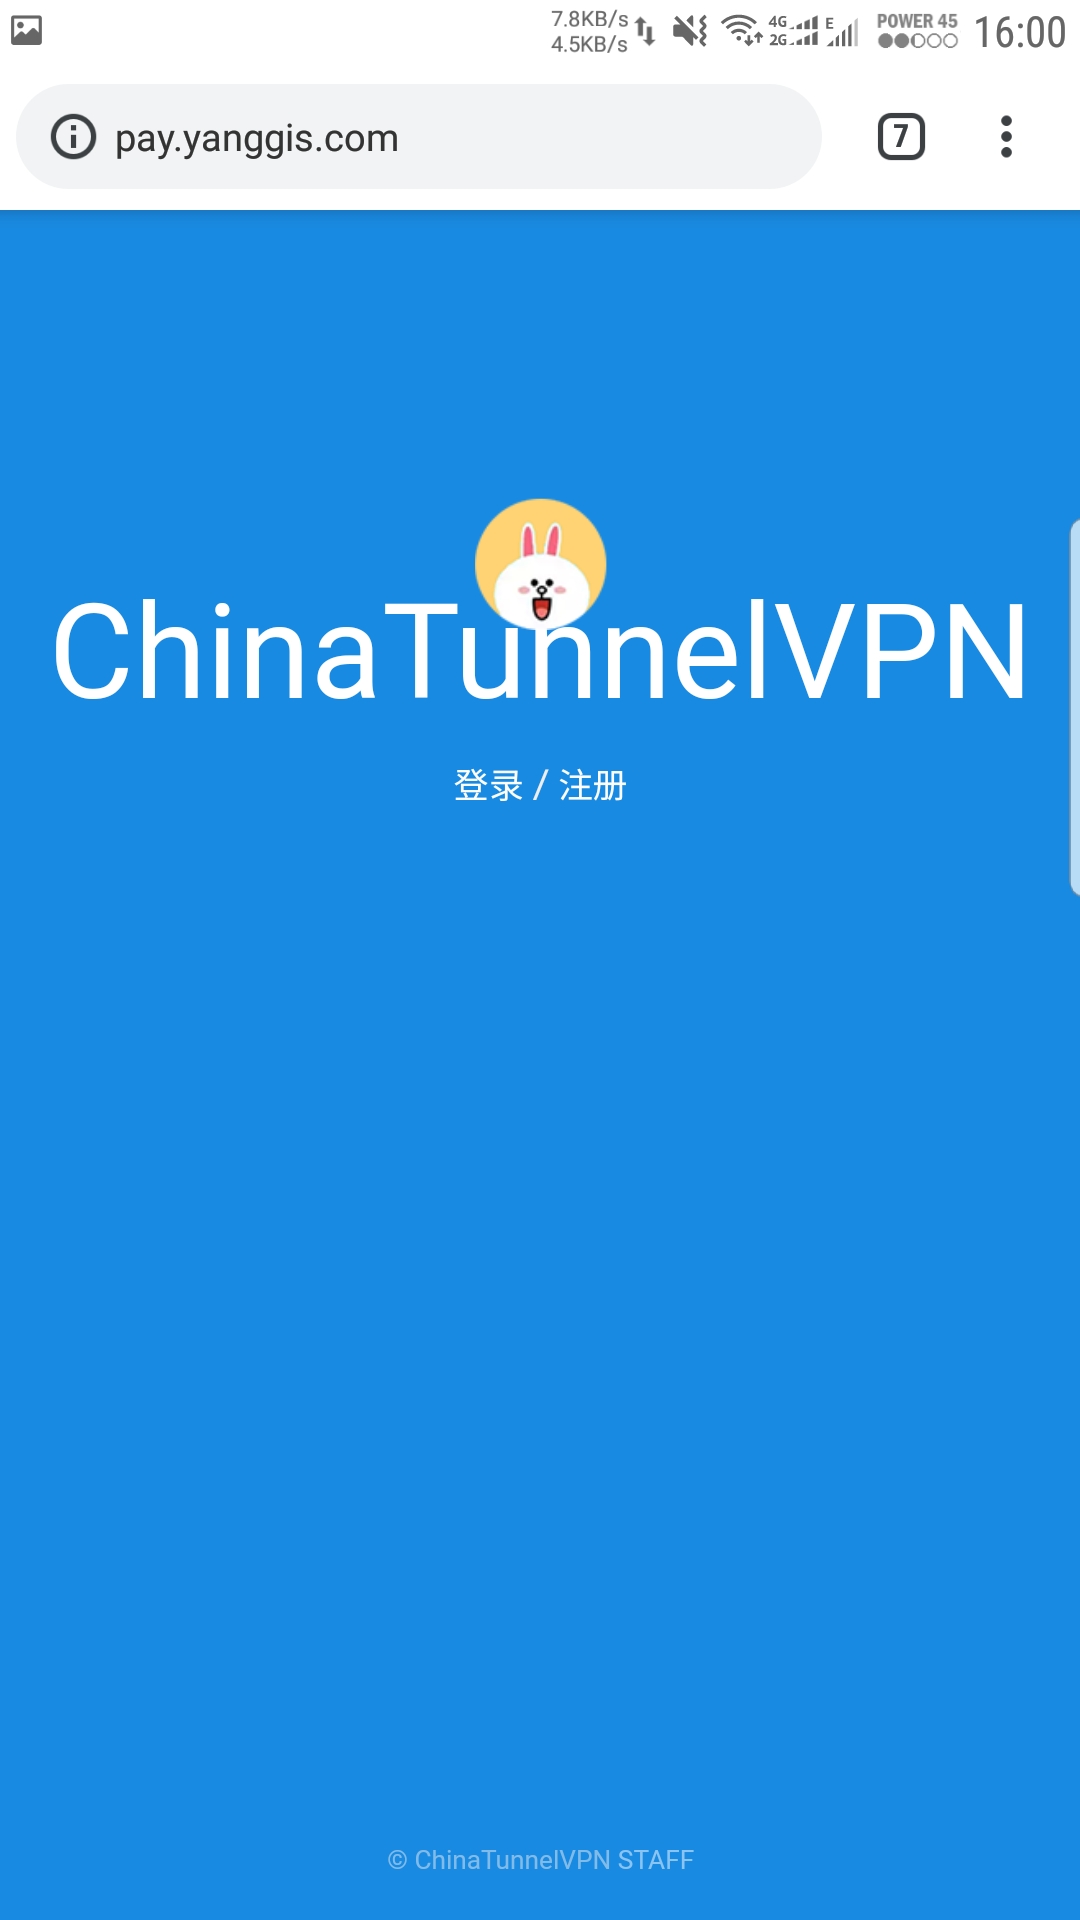 chinatunnelVPN3.jpg